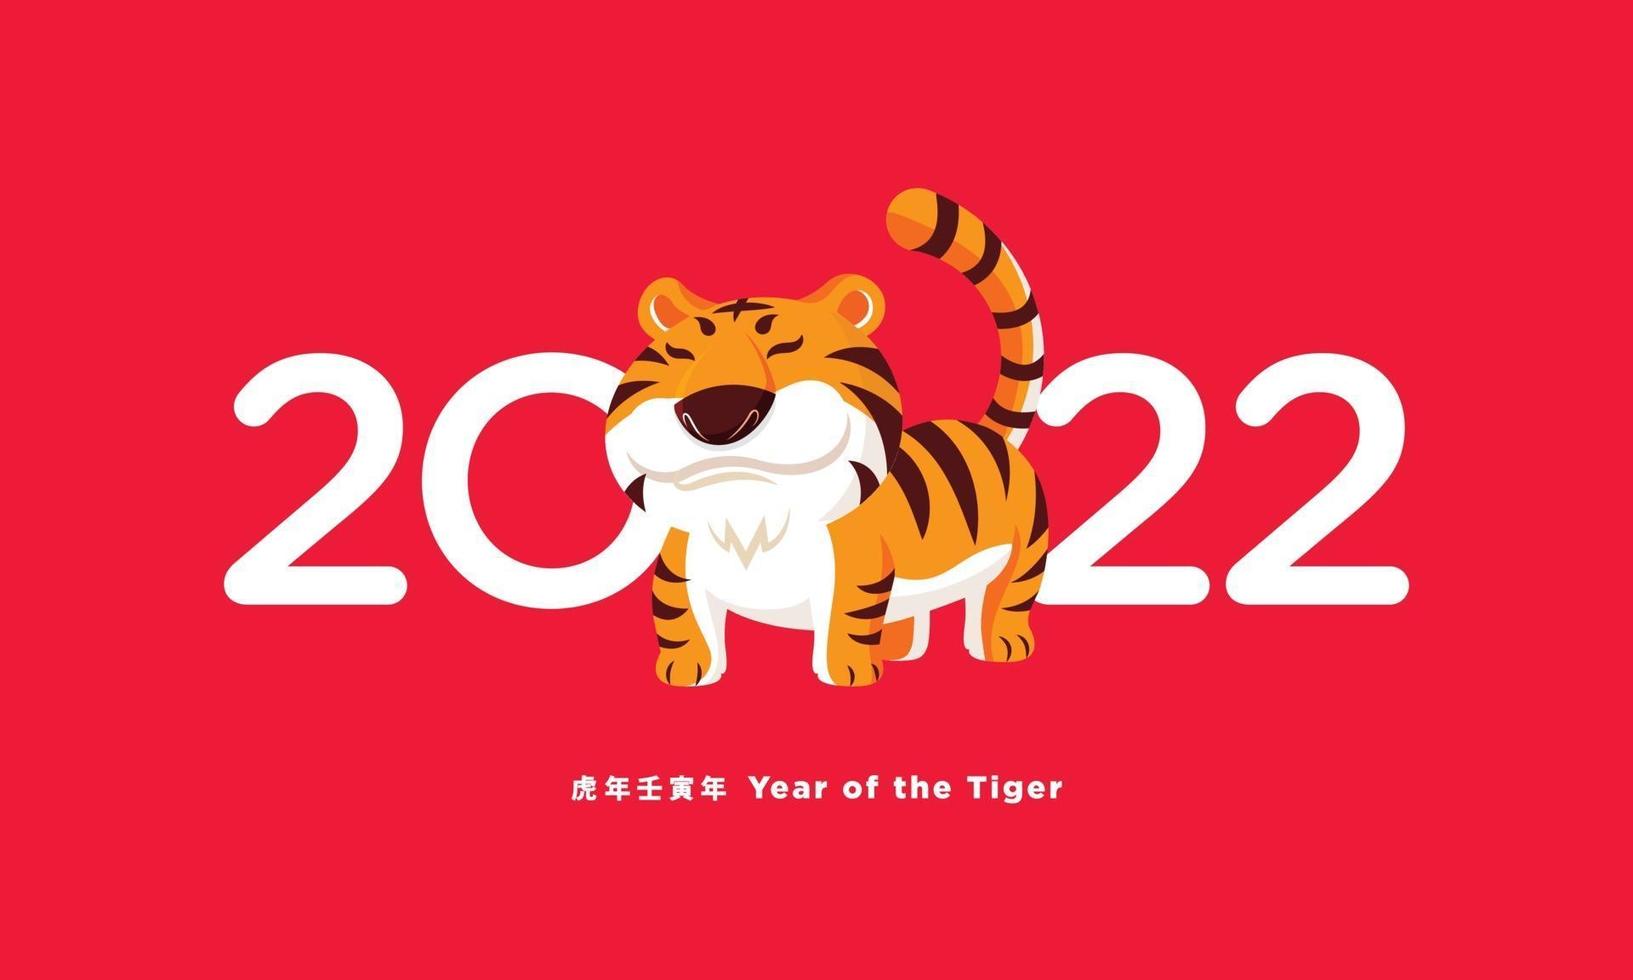 nouvel an chinois 2022. tigre mignon de dessin animé avec signe 2022 vecteur